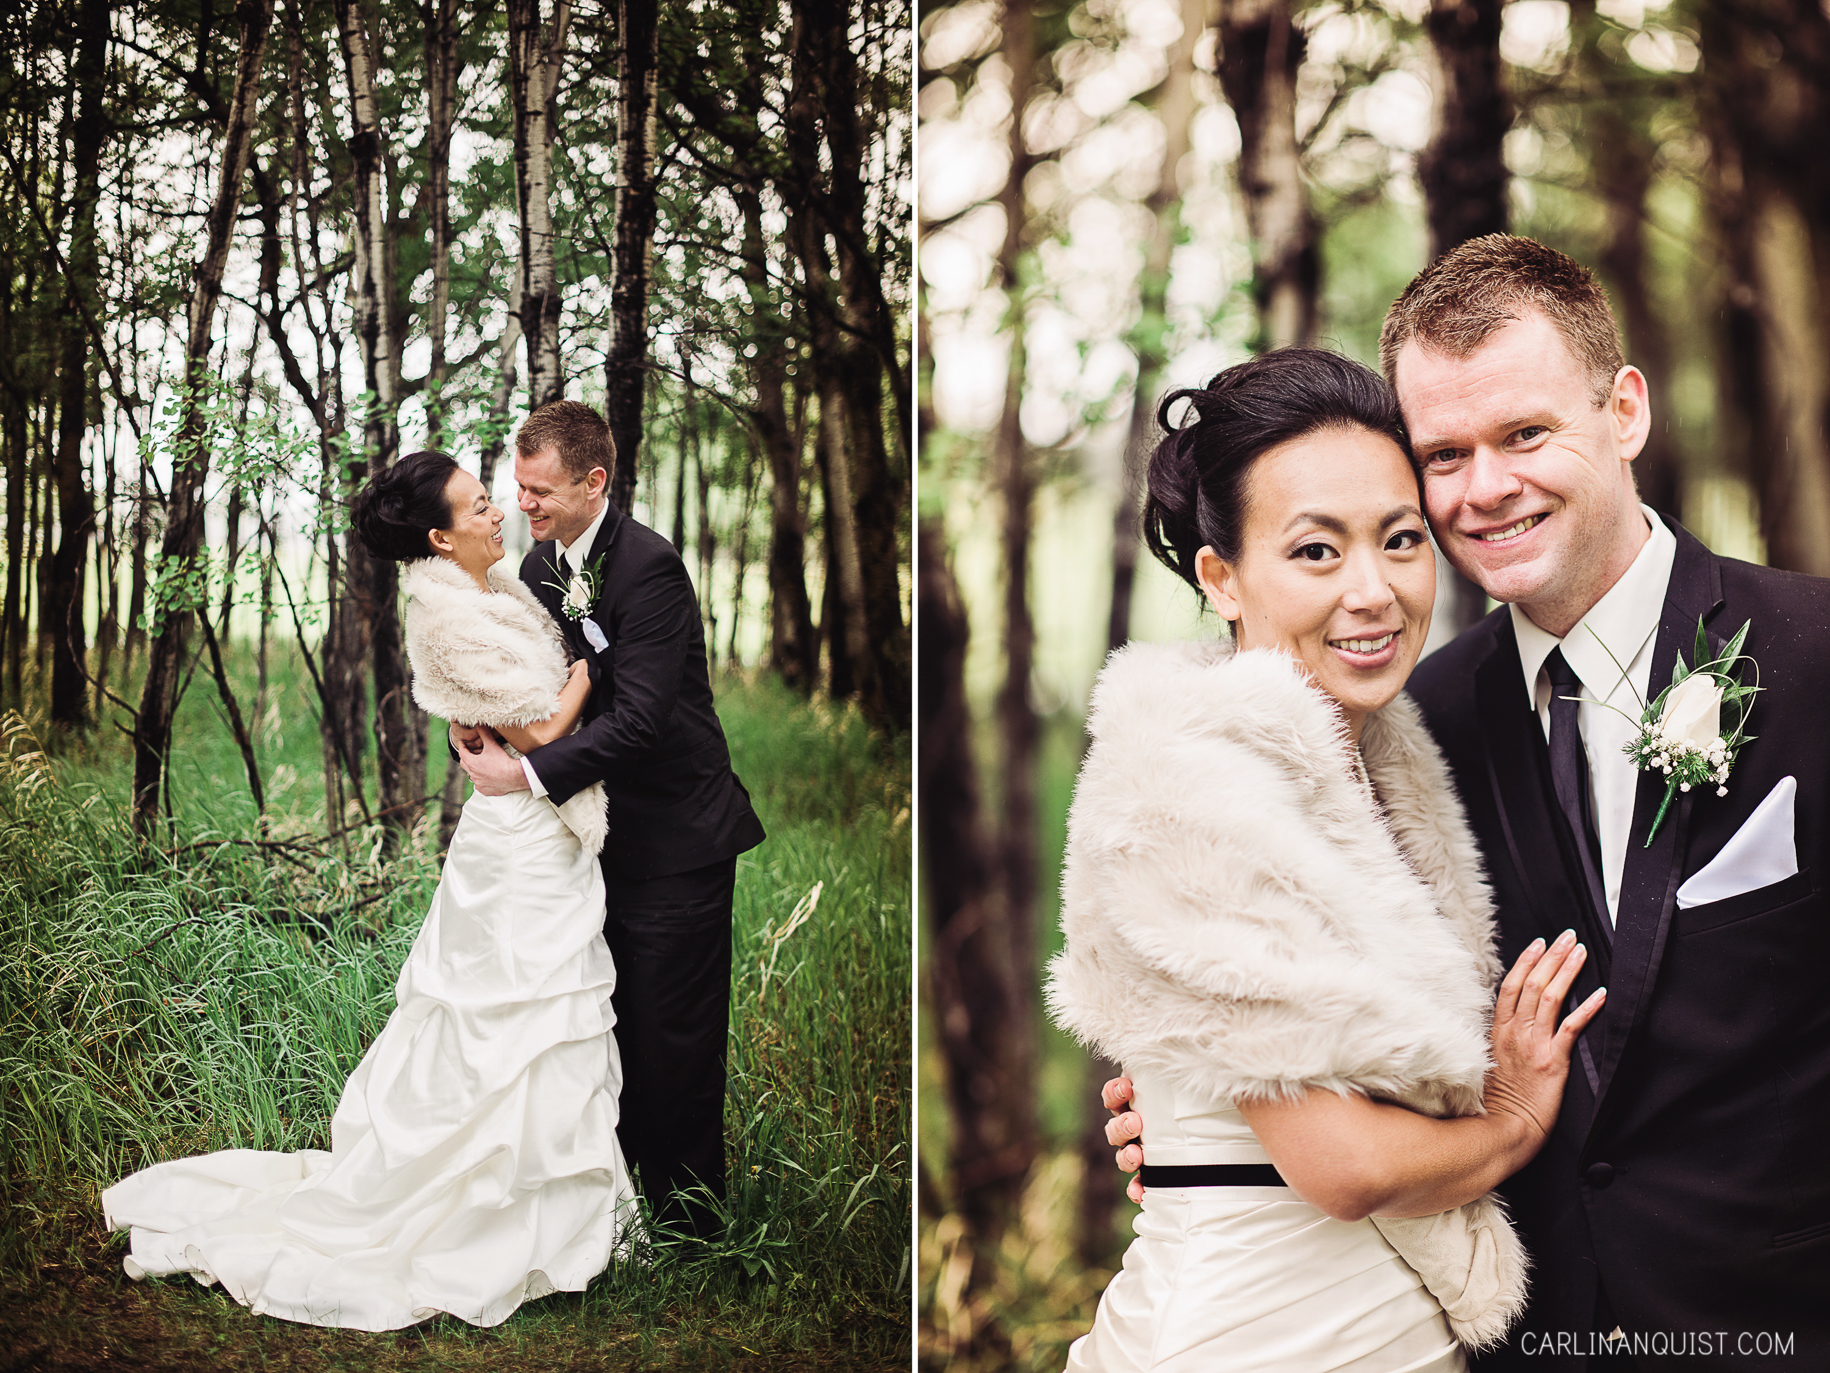 Bride & Groom | Calgary Wedding Photographer